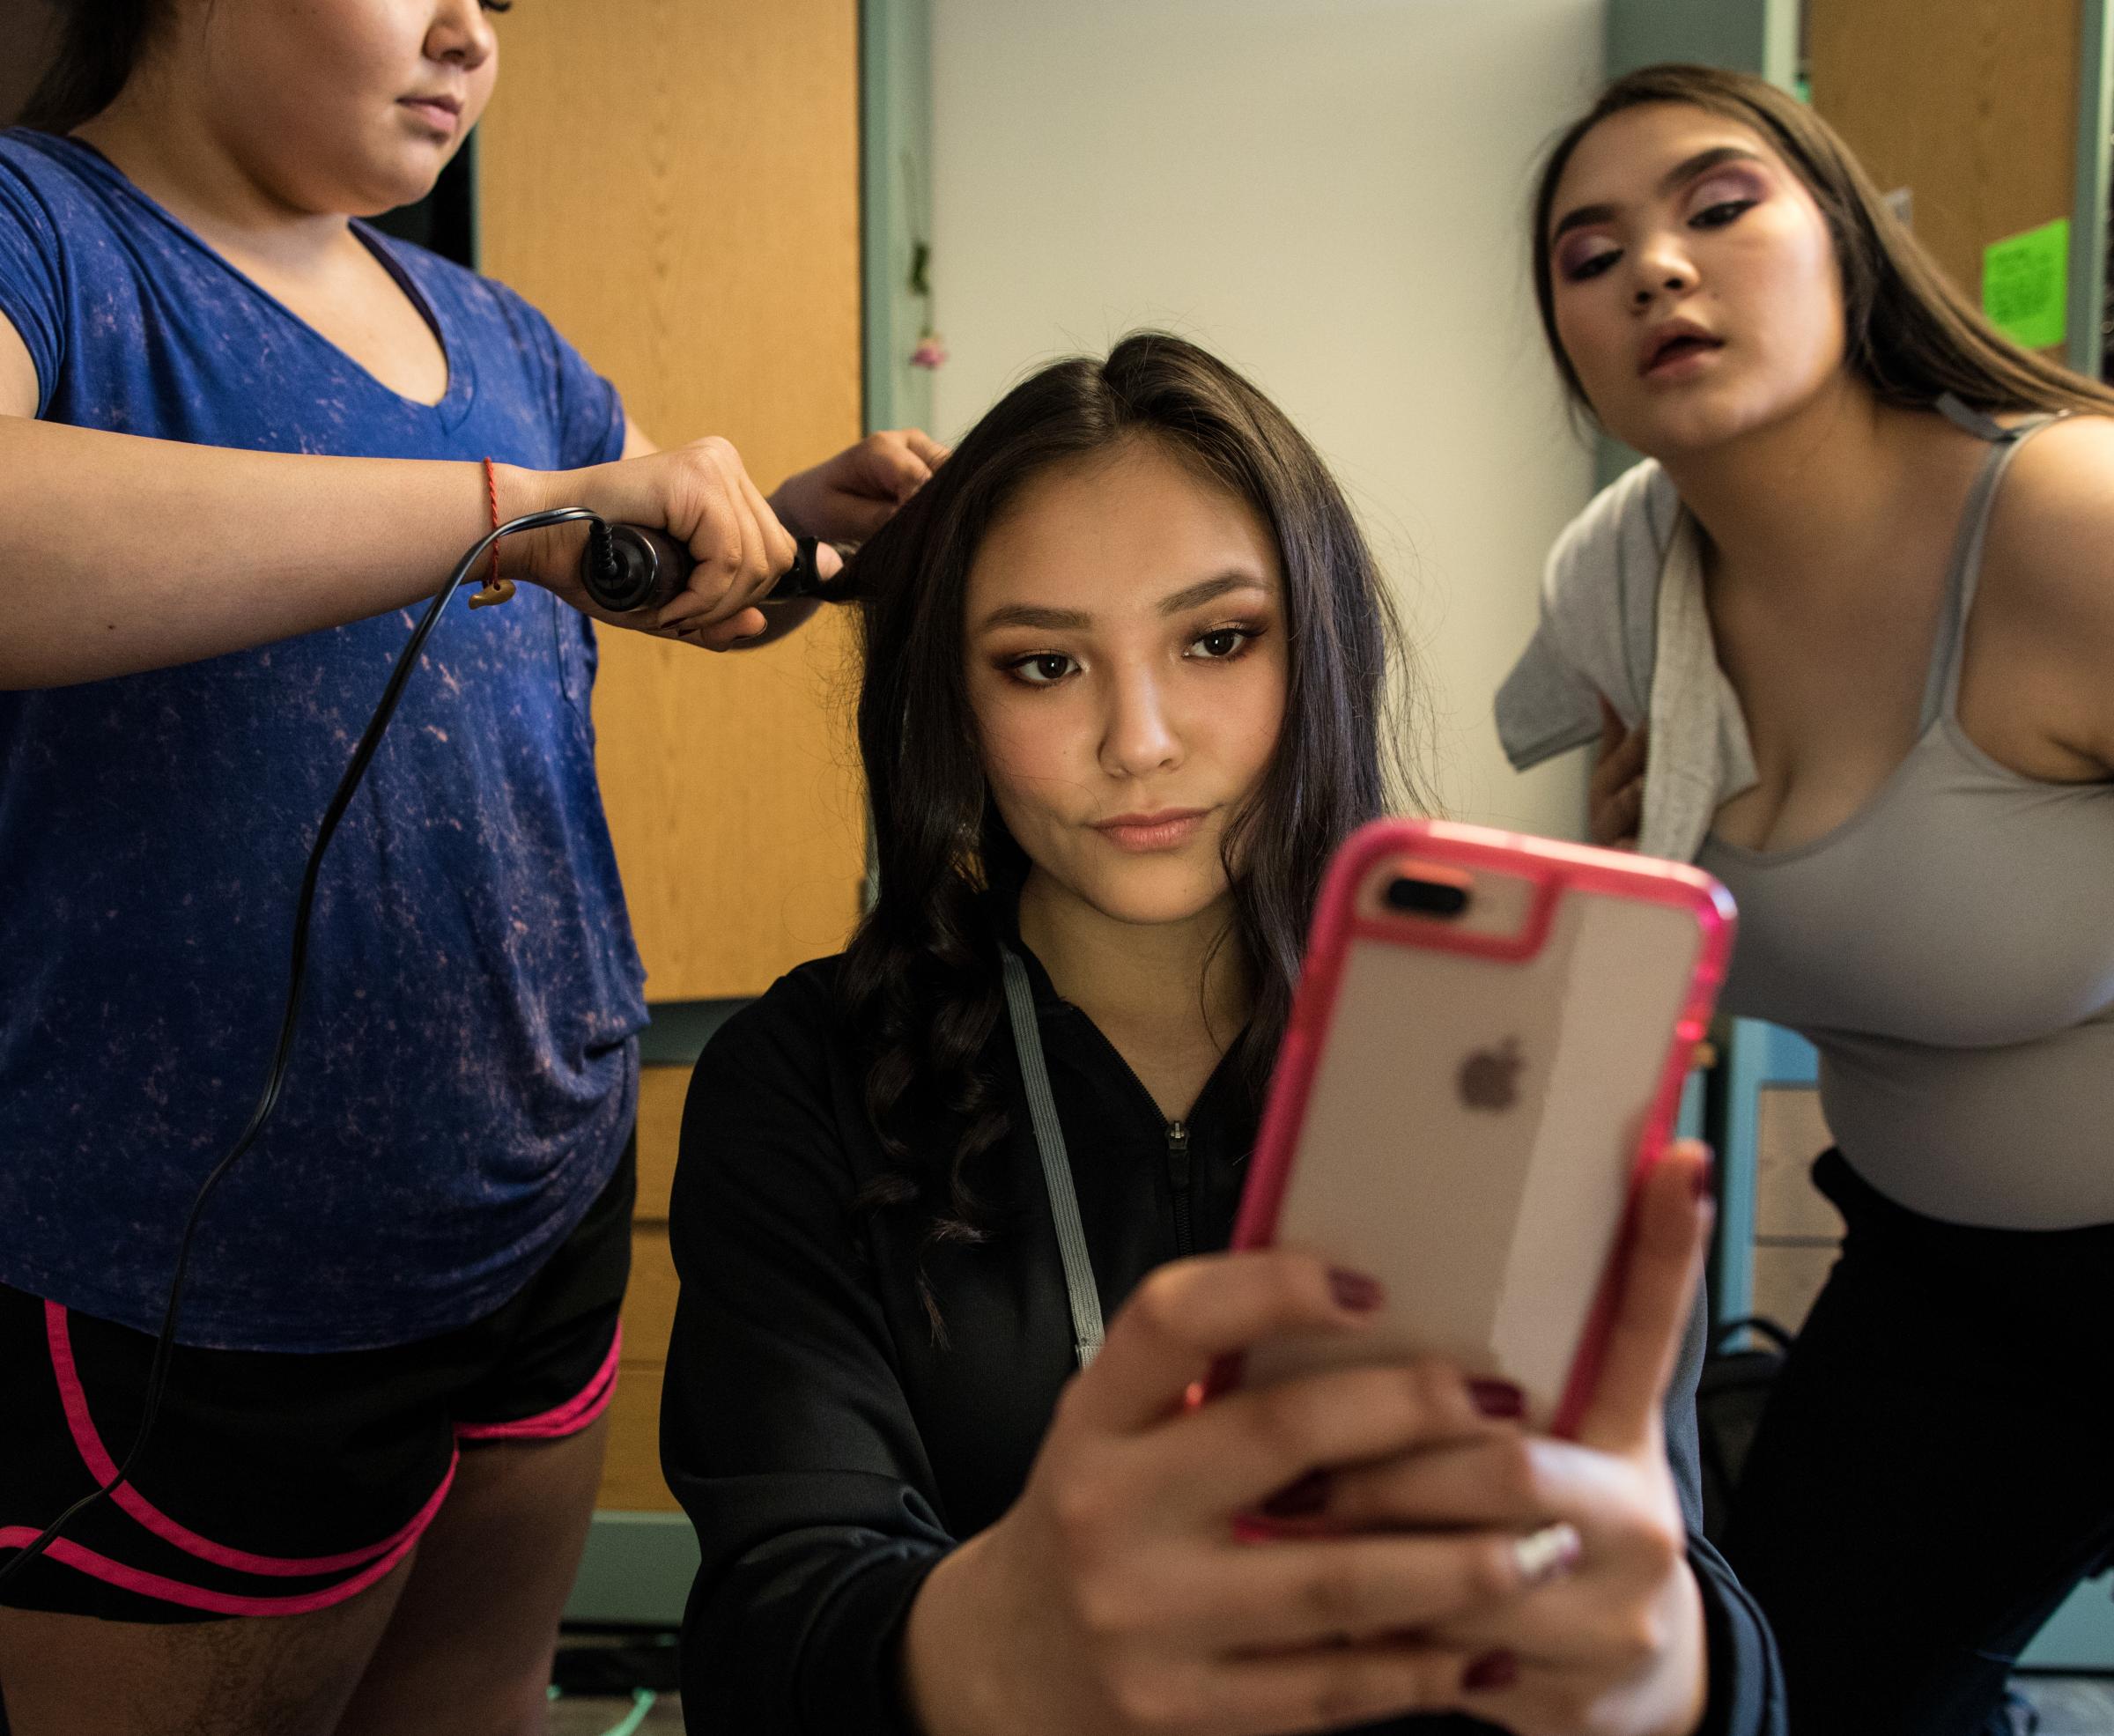 SITKA, ALASKA - SATURDAY, APRIL 7, 2018: Courtney Lestenkof takes a selfie while Claire Greene,...